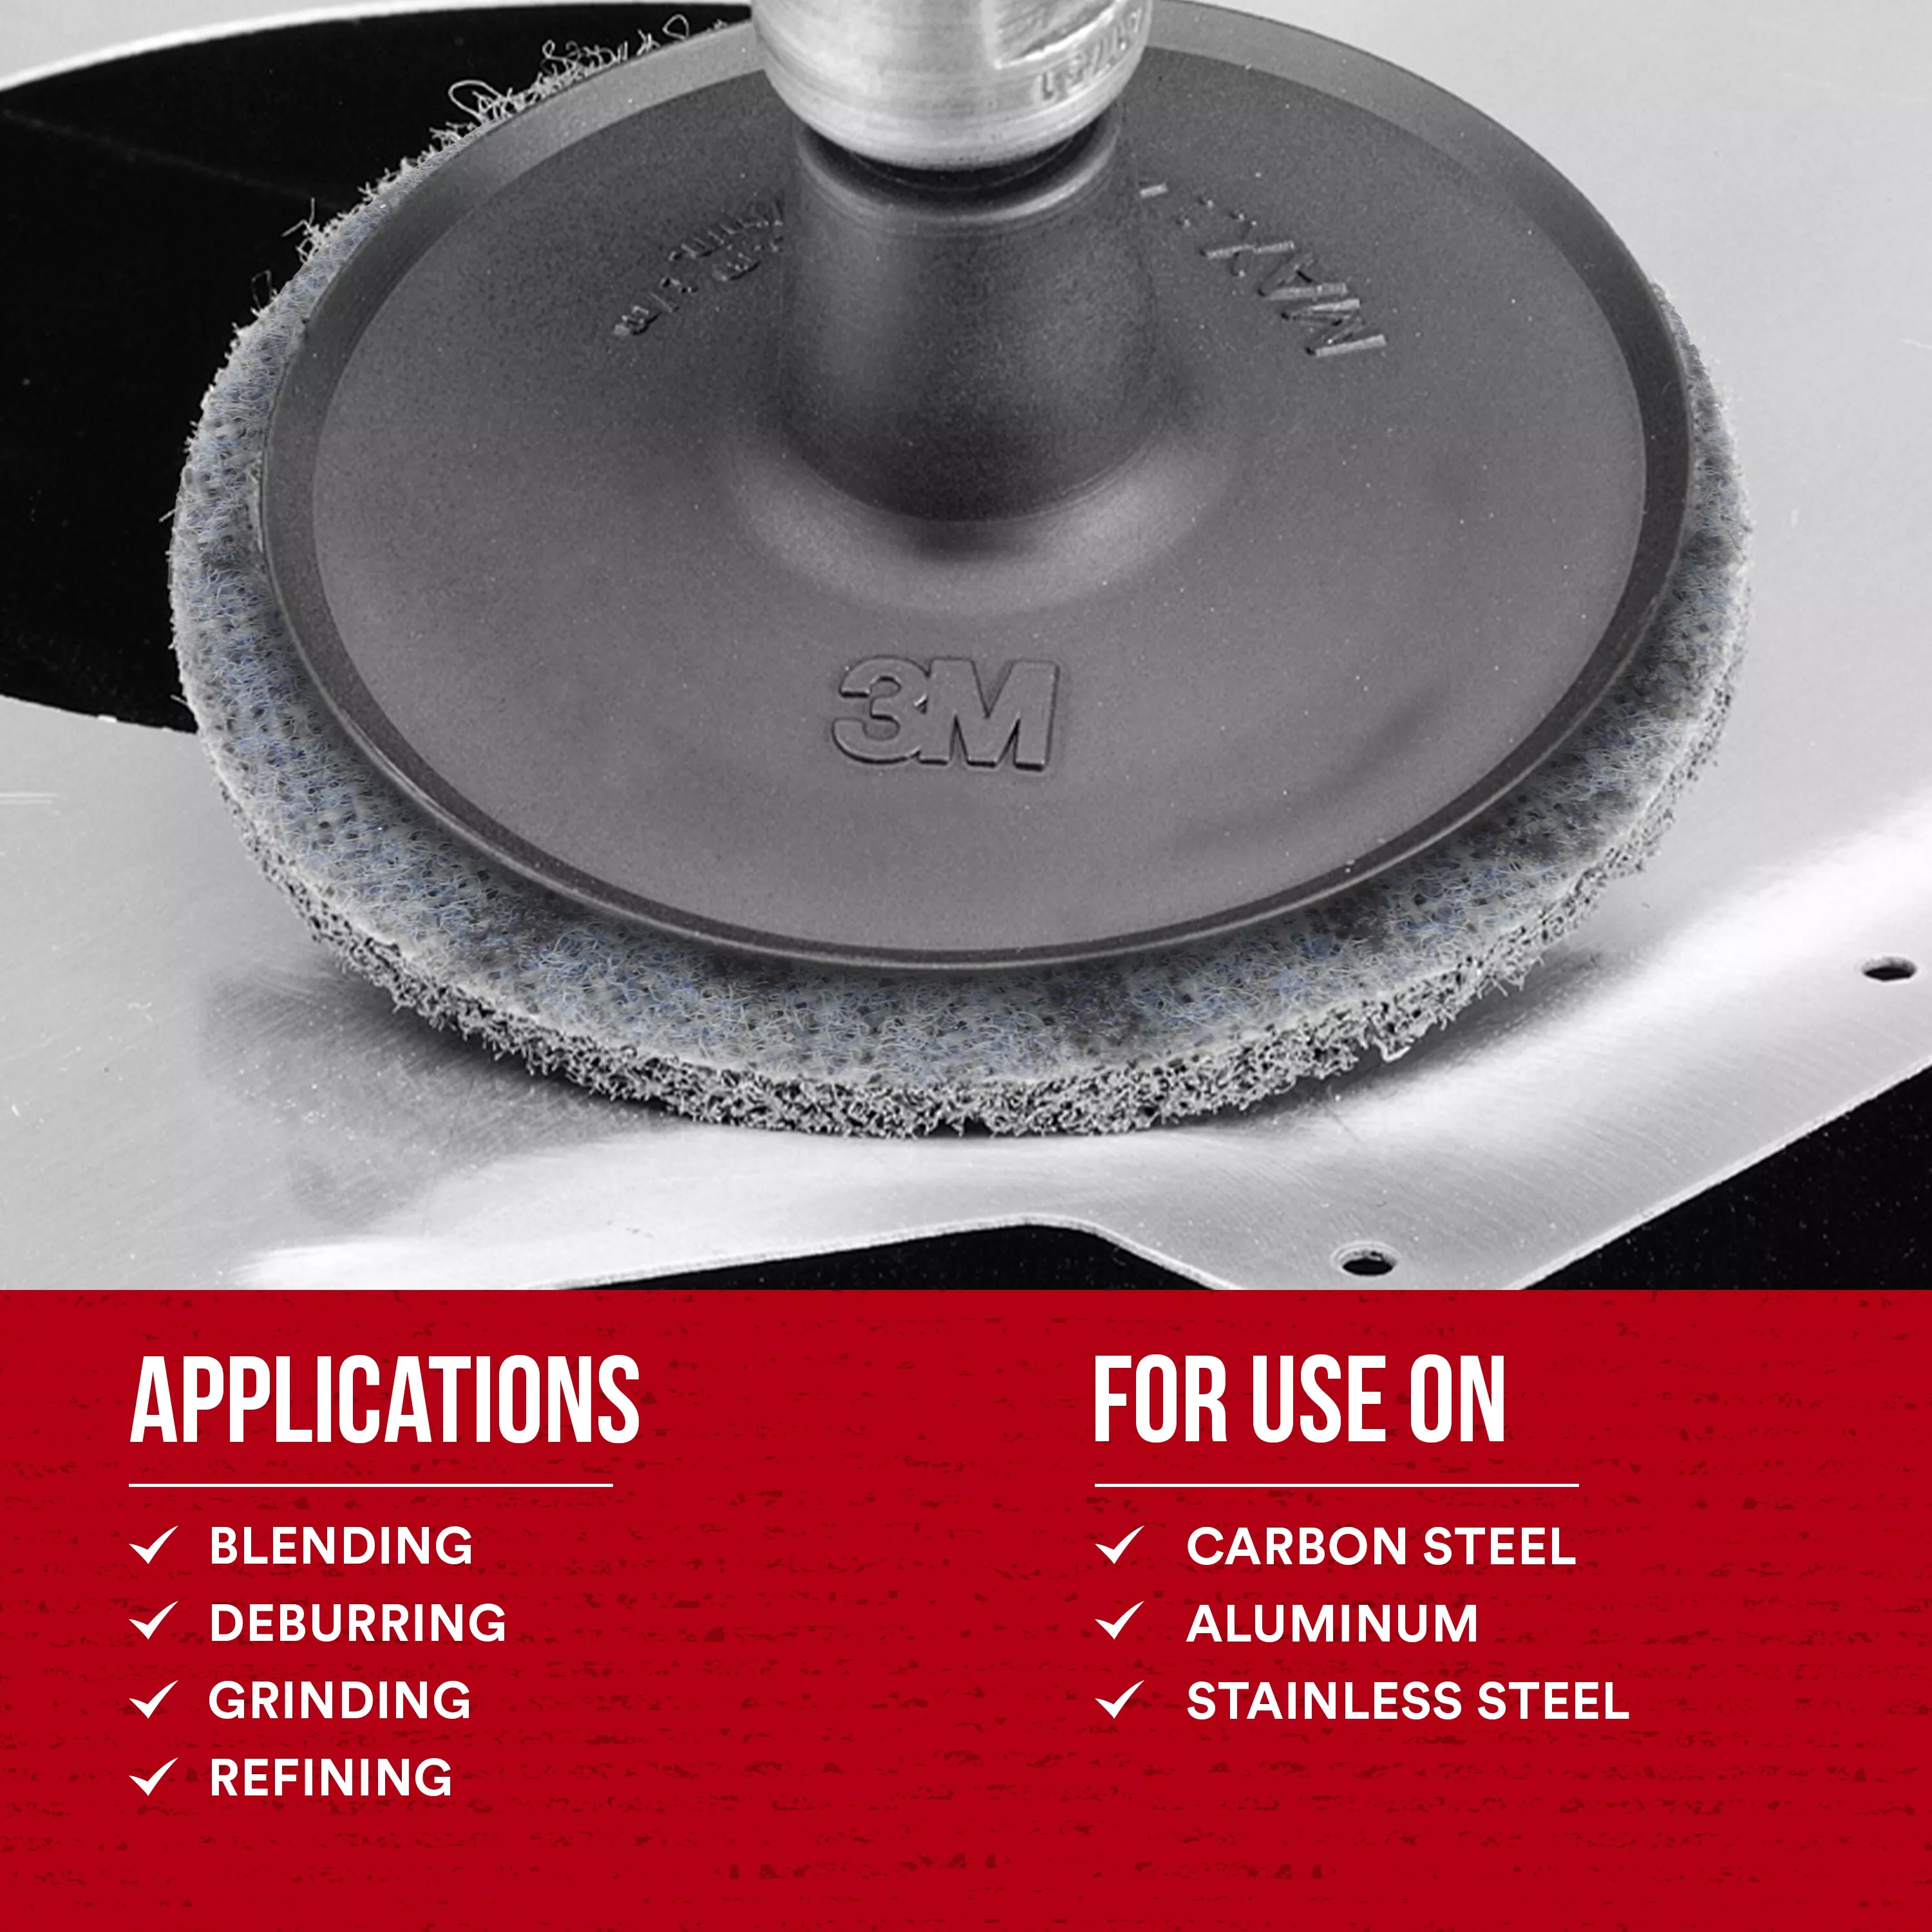 SKU 7100020266 | Scotch-Brite™ Roloc™ SE Surface Conditioning Disc